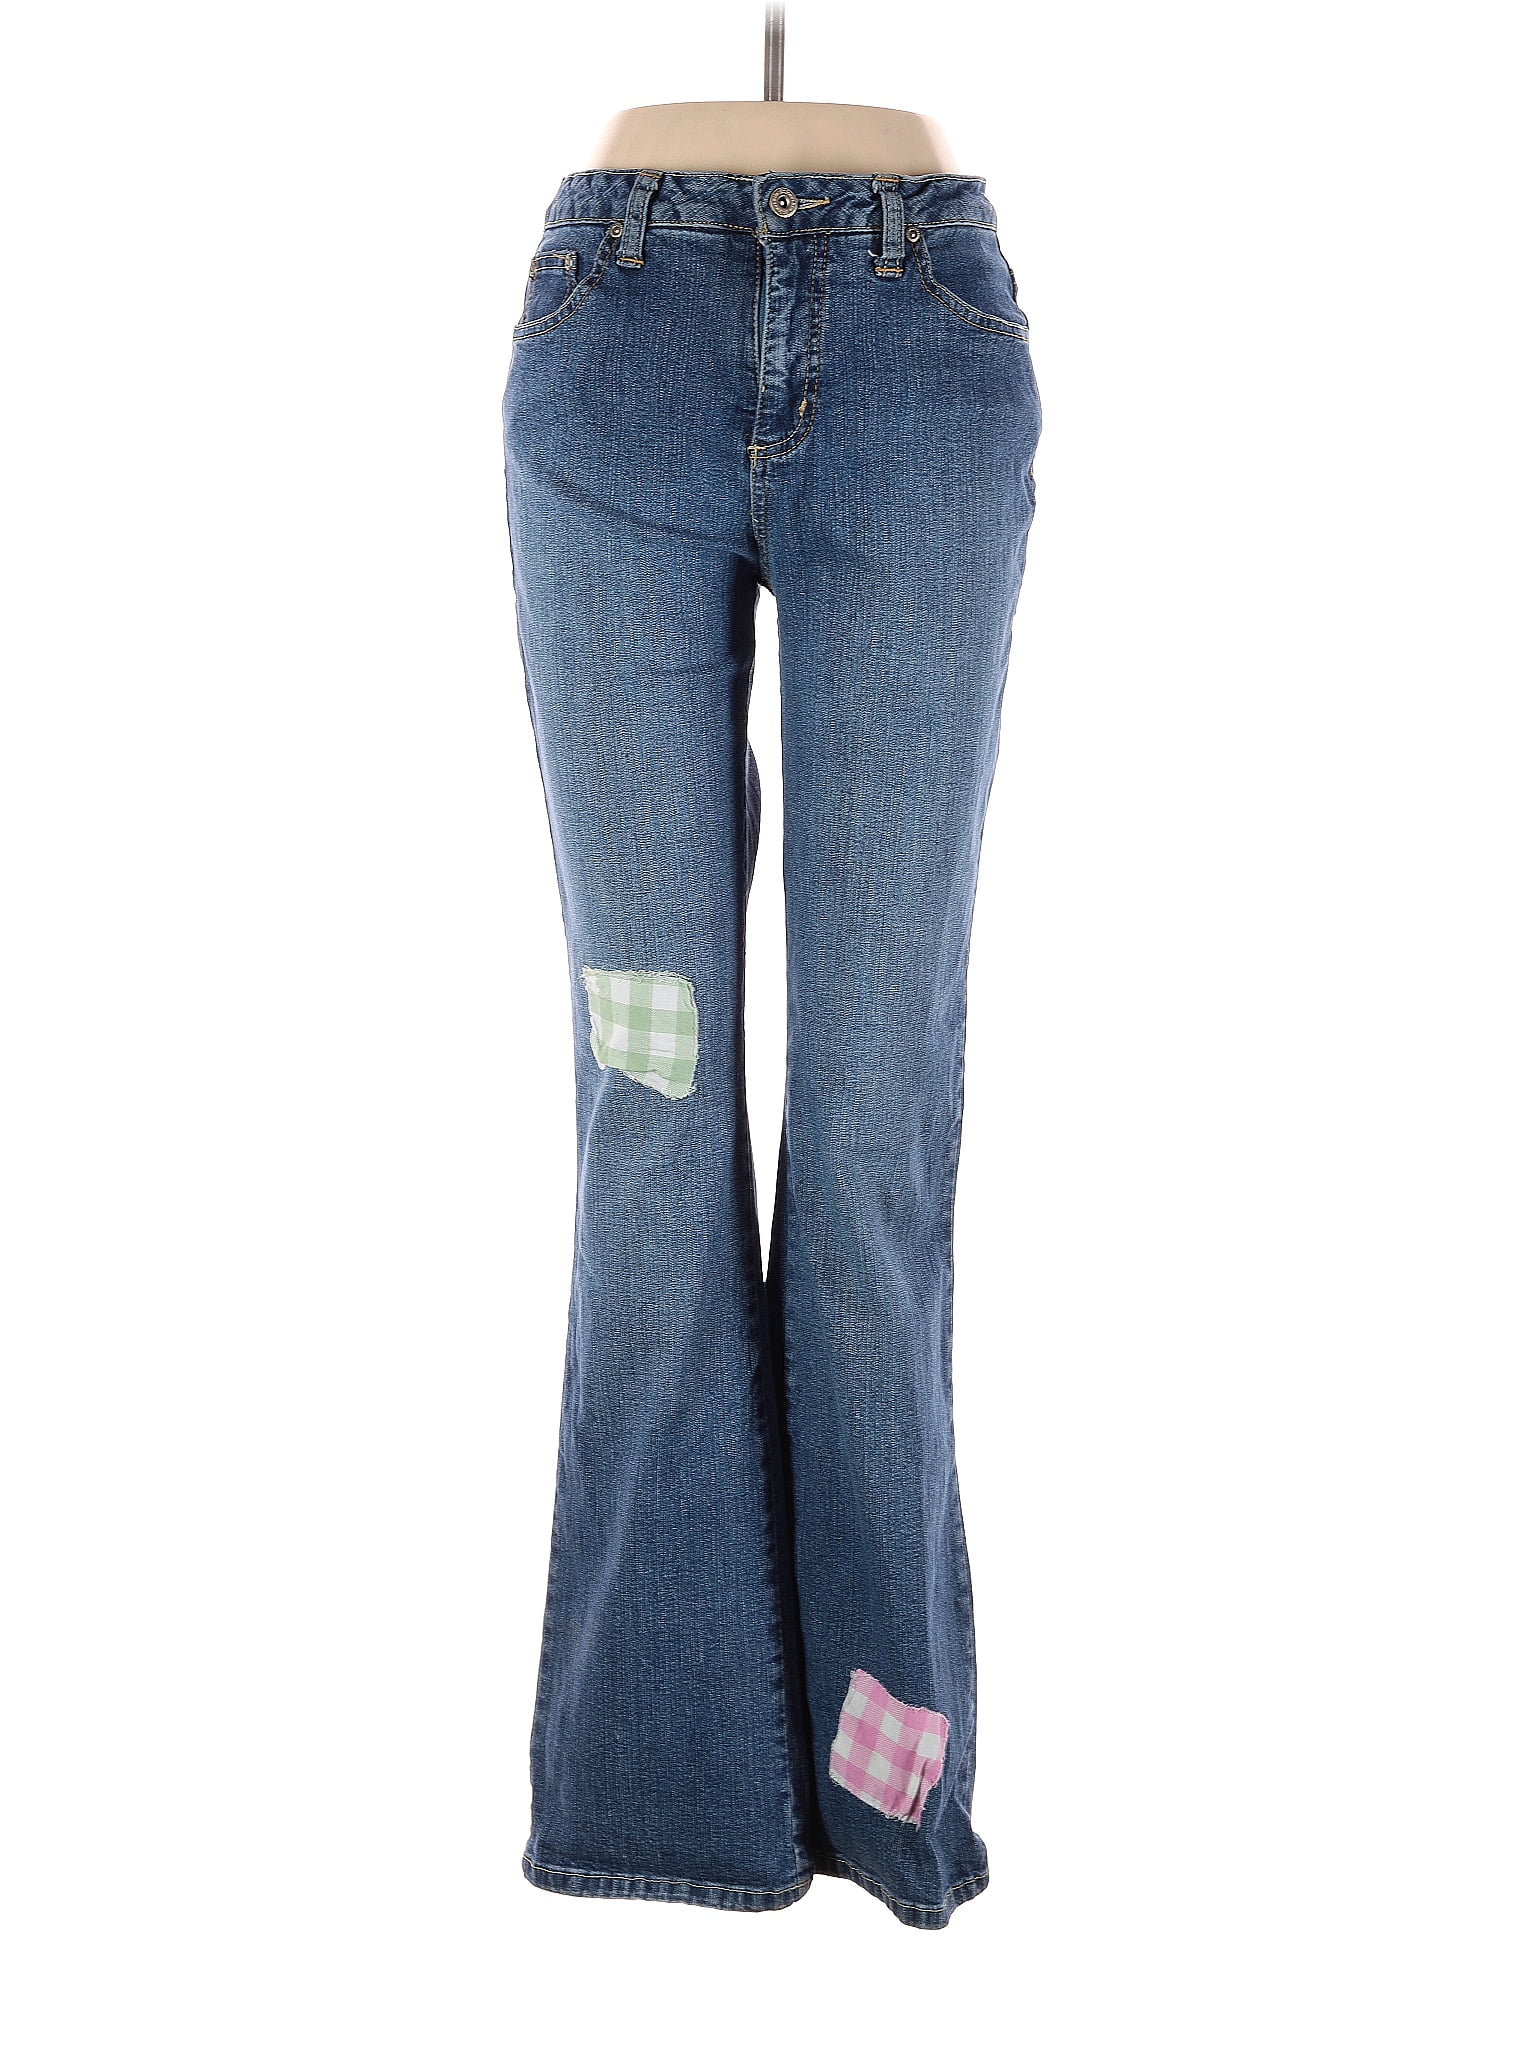 Bobbie Brooks Solid Blue Casual Pants Size XL - 56% off